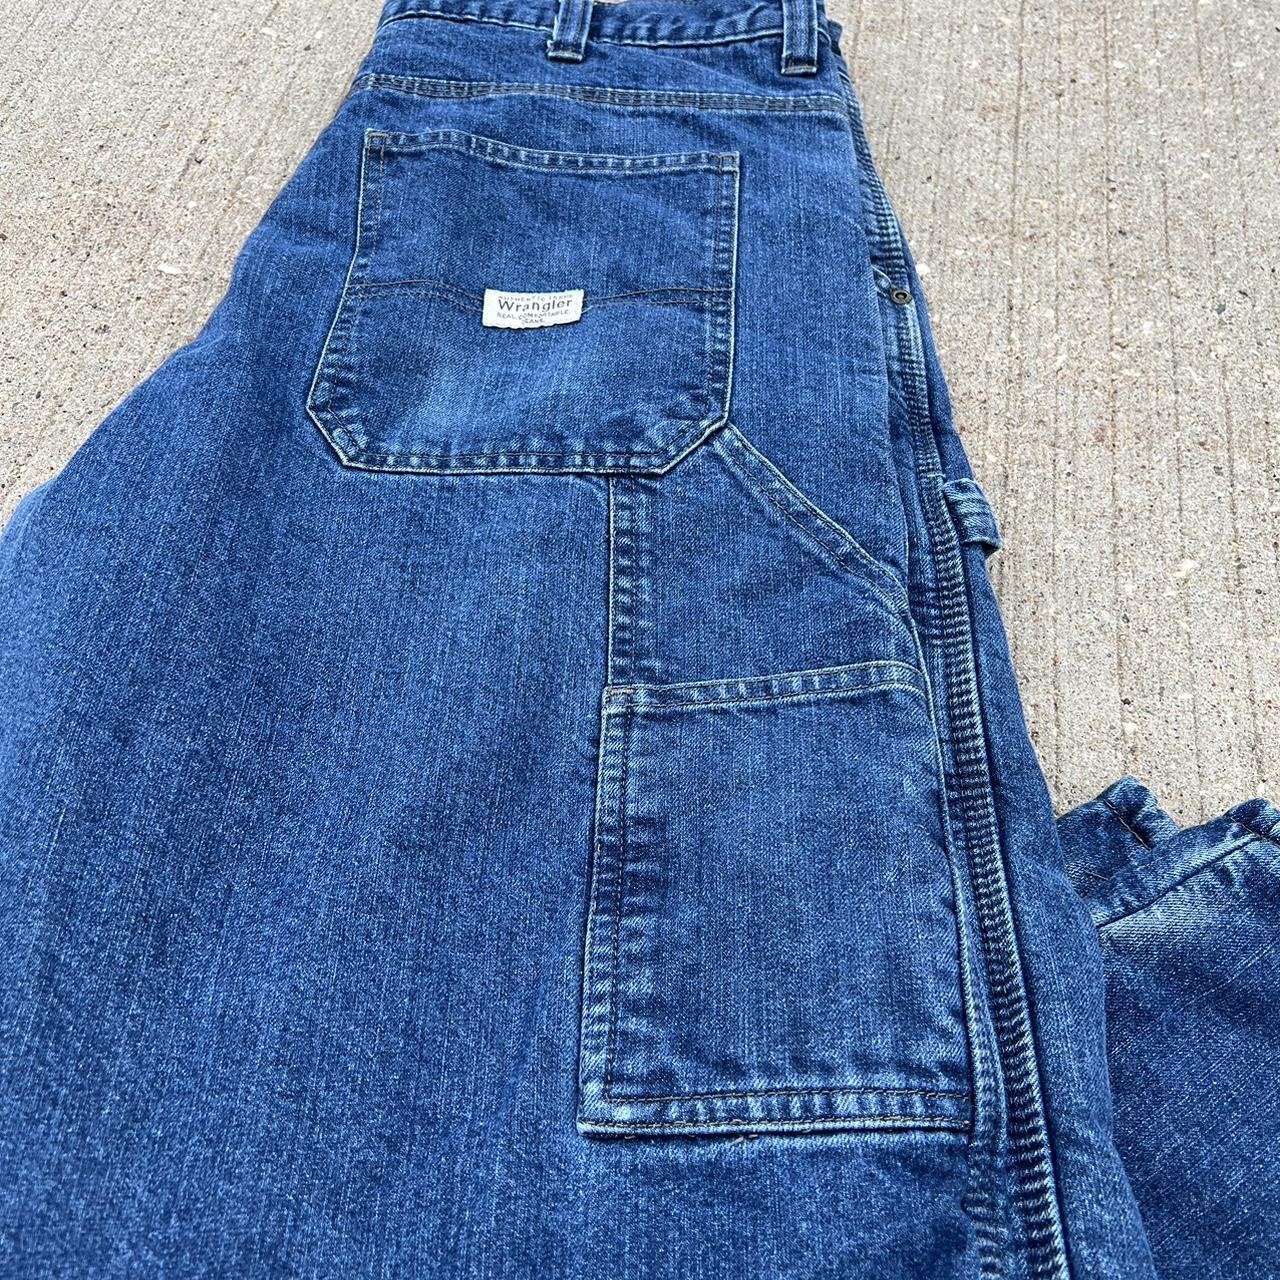 Vintage Wrangler fleece lined jeans 34x30... - Depop